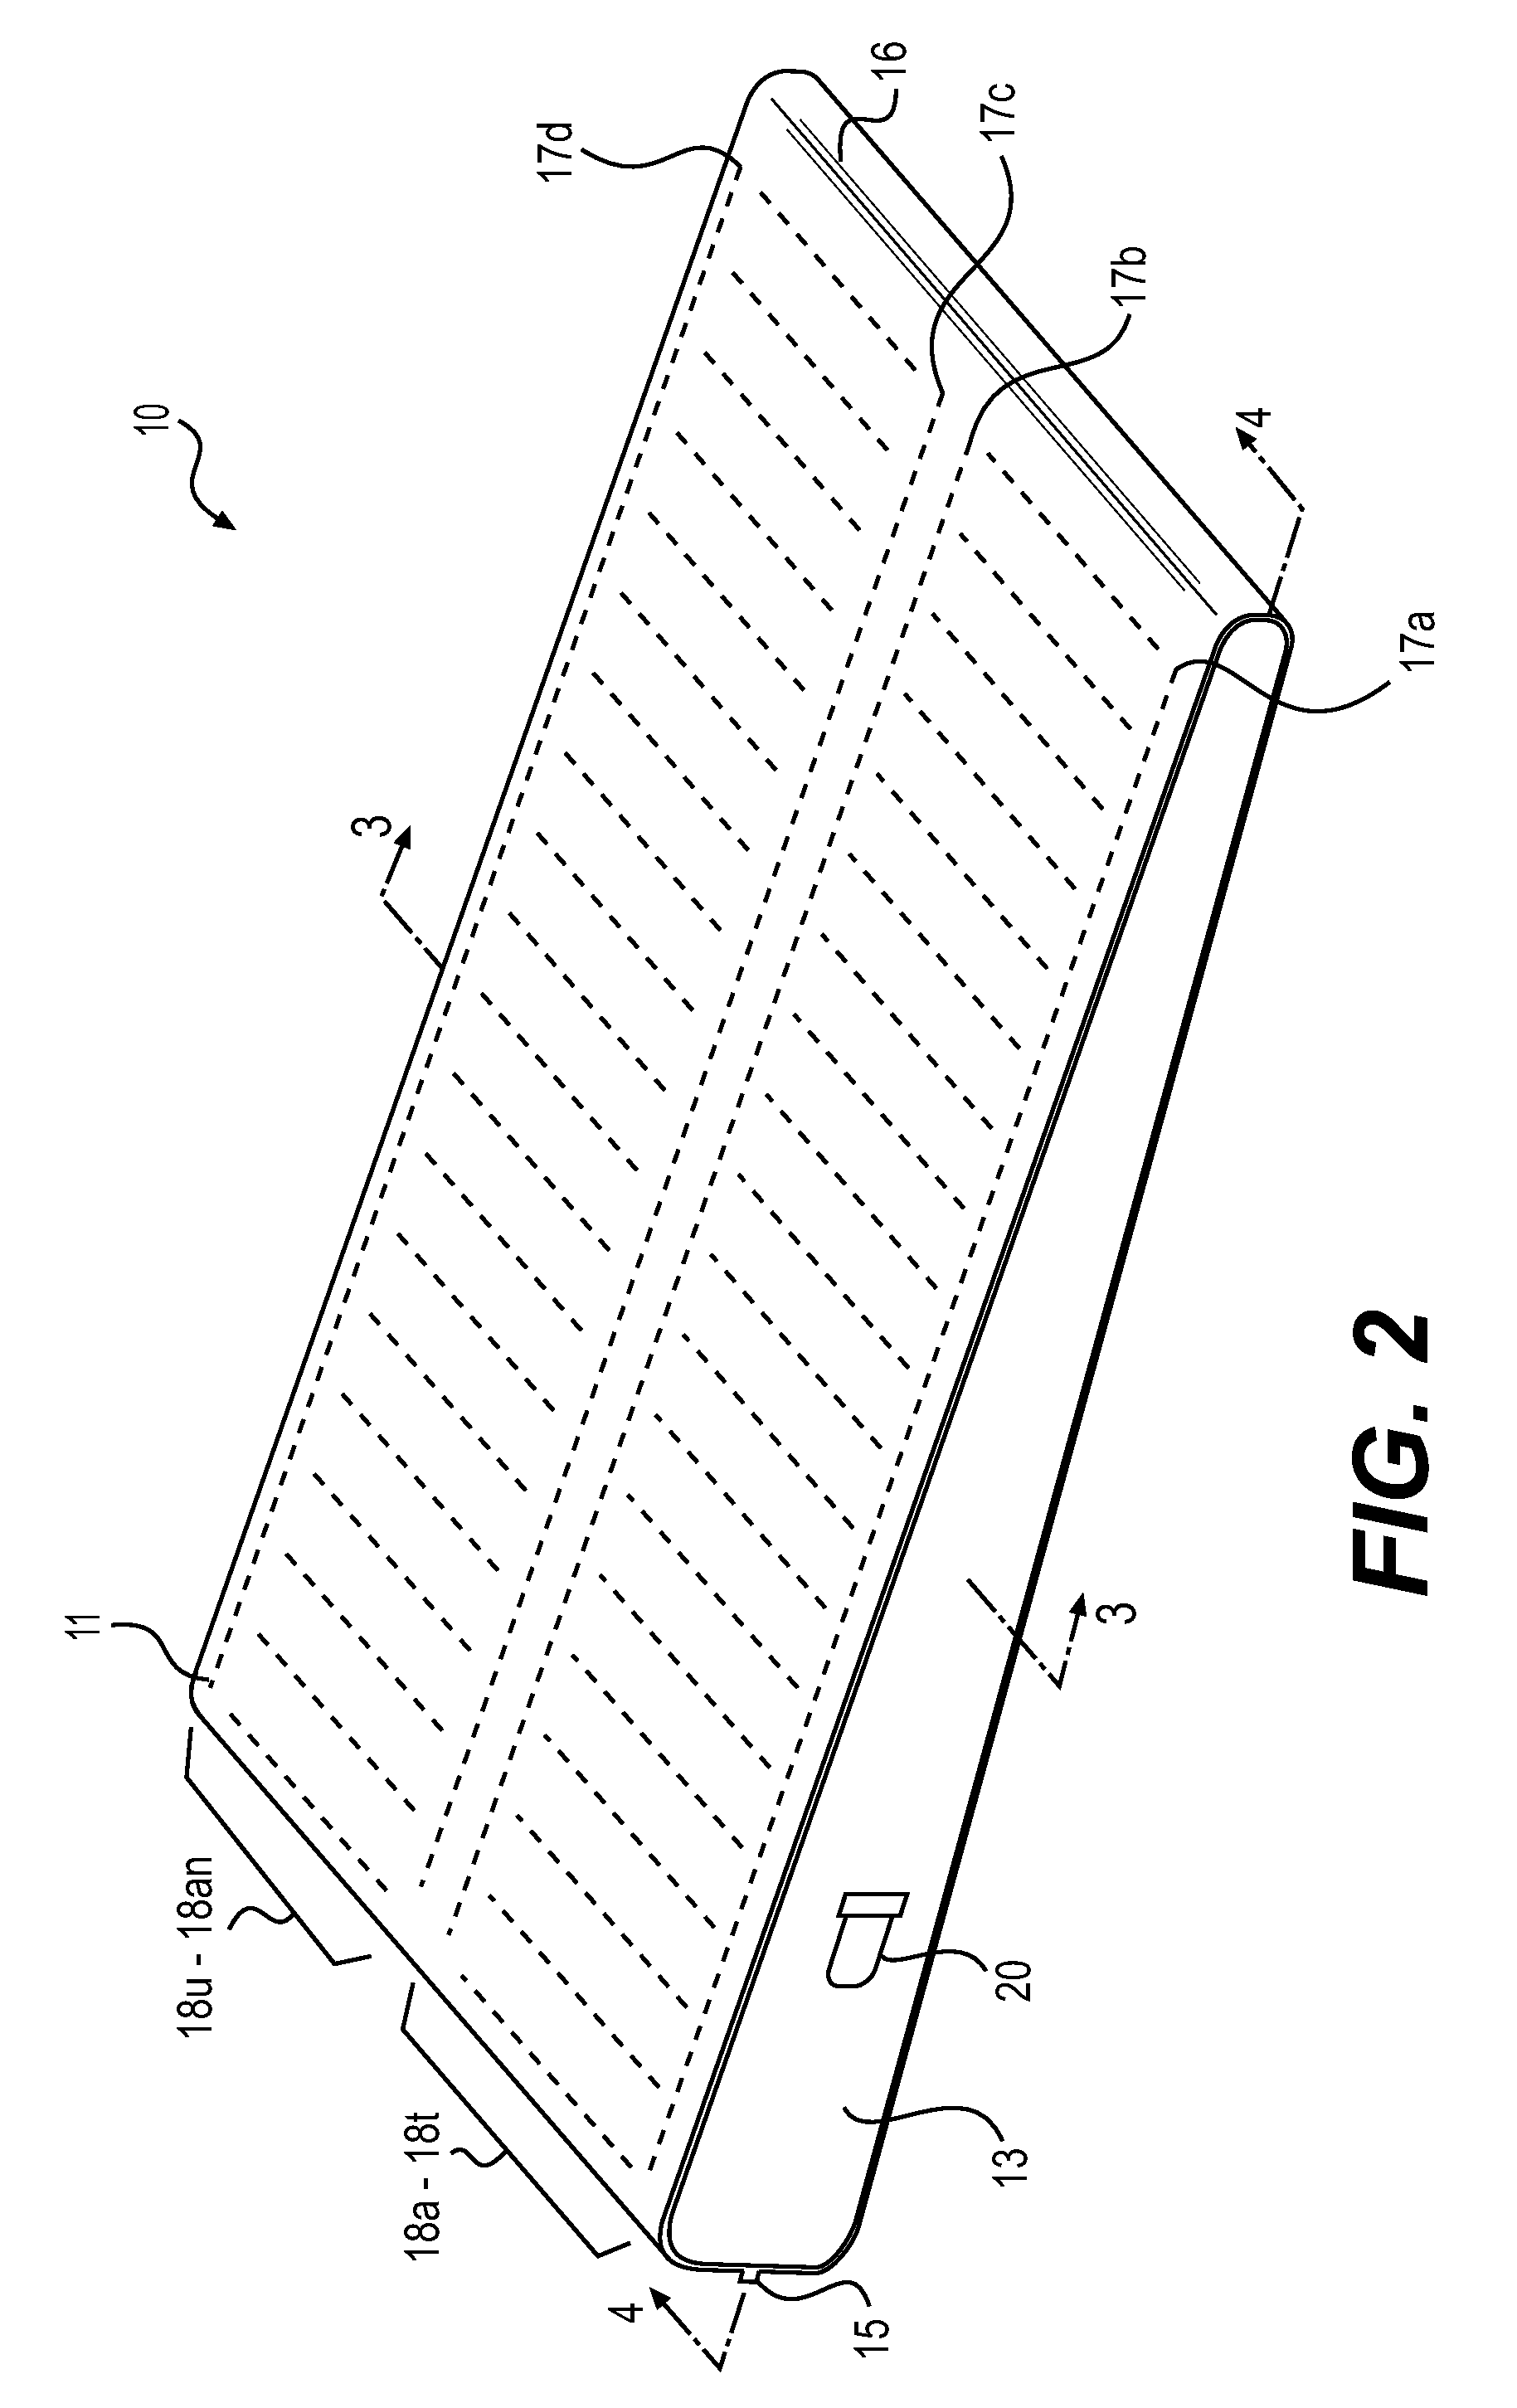 Inclined air mattress having internal air baffles and supports